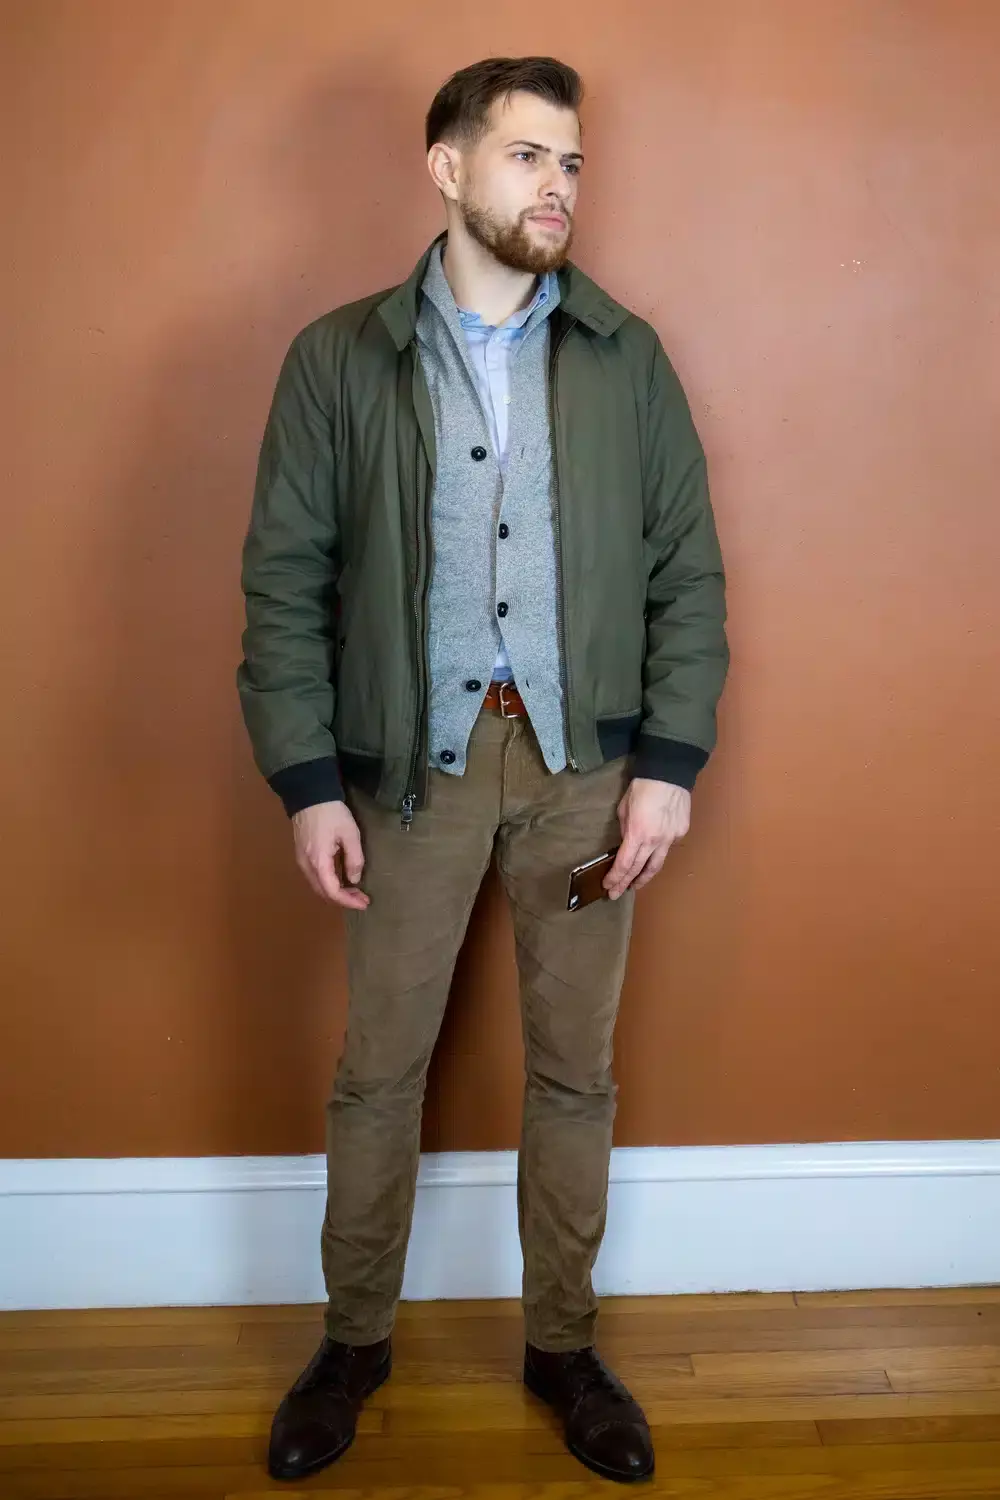 Ryan Wearing Bomber jacket over cardigan